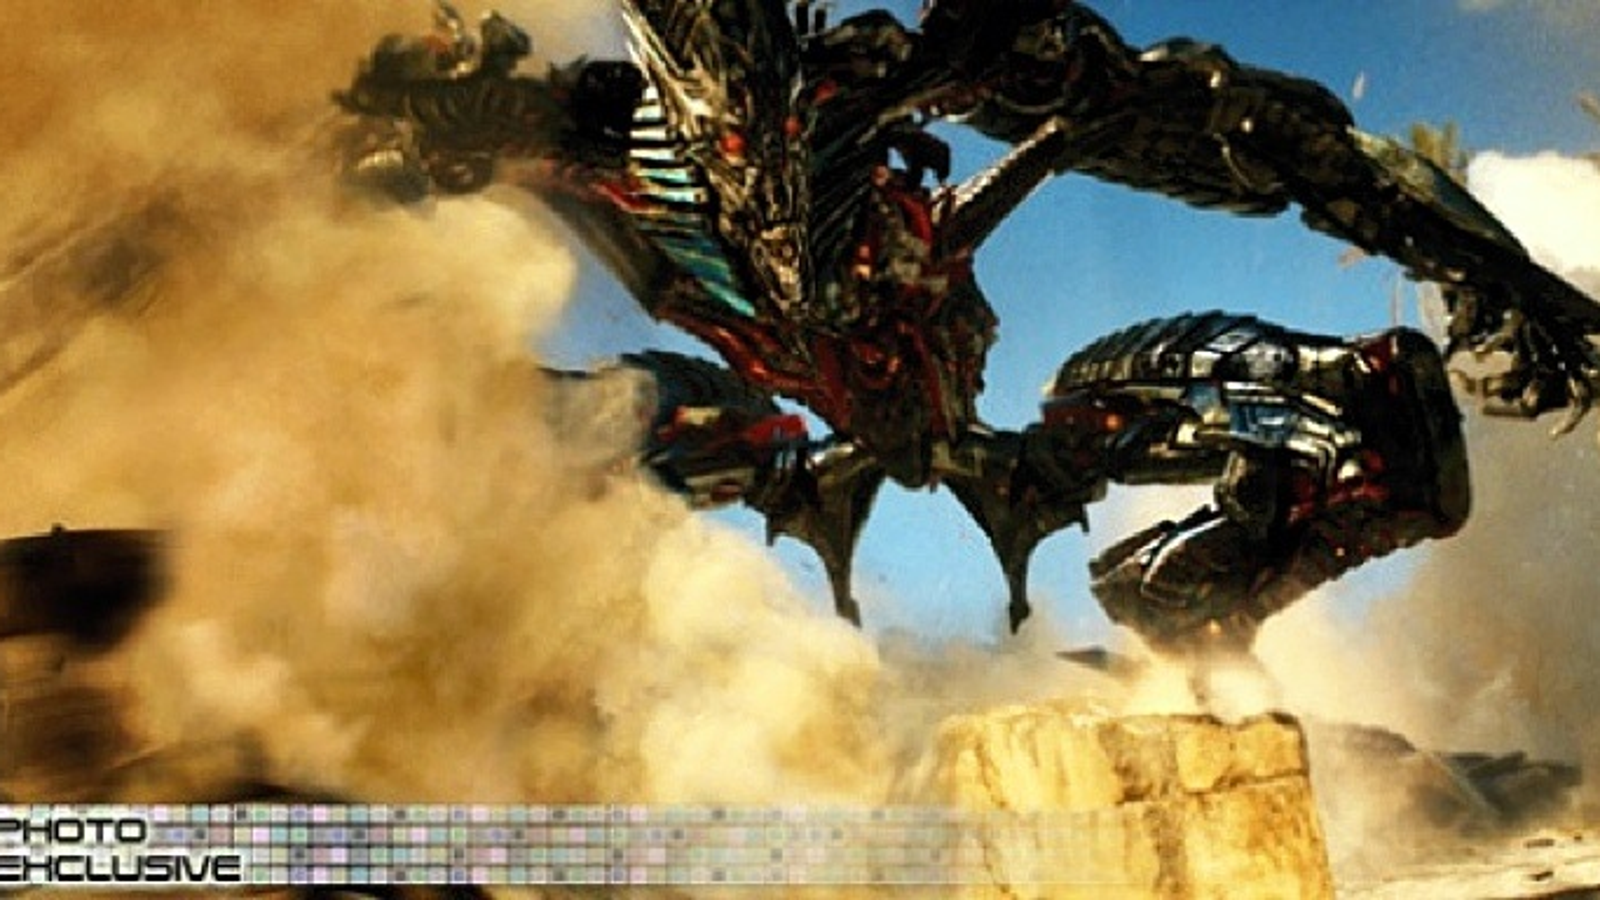 download Transformers: Revenge of the Fallen free